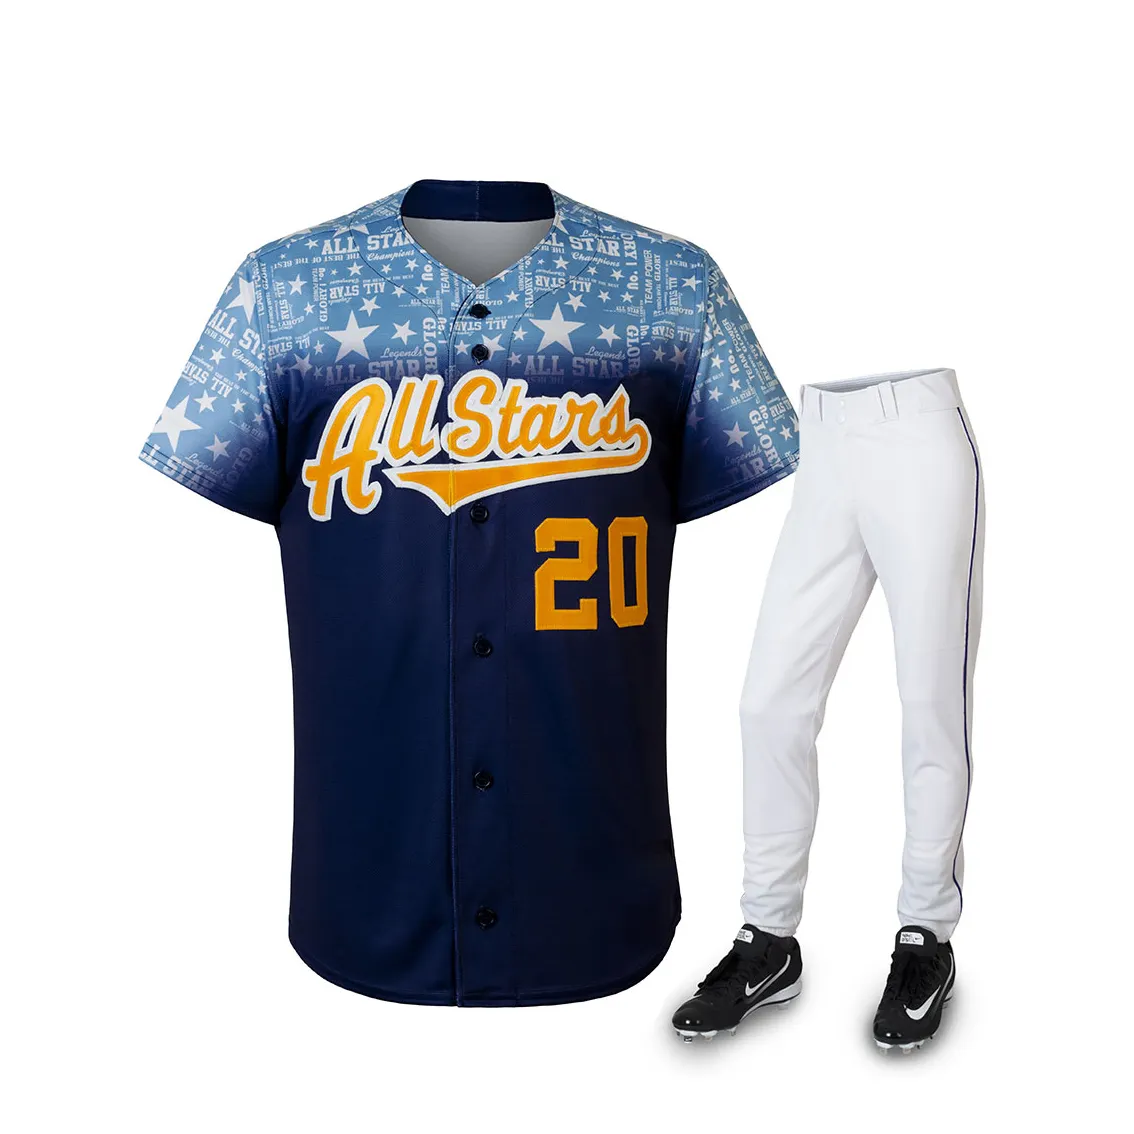 Baseball Uniform Neues Design Atmungsaktiver Baseball Softball Sport uniformen Hochwertiger Sublimation druck